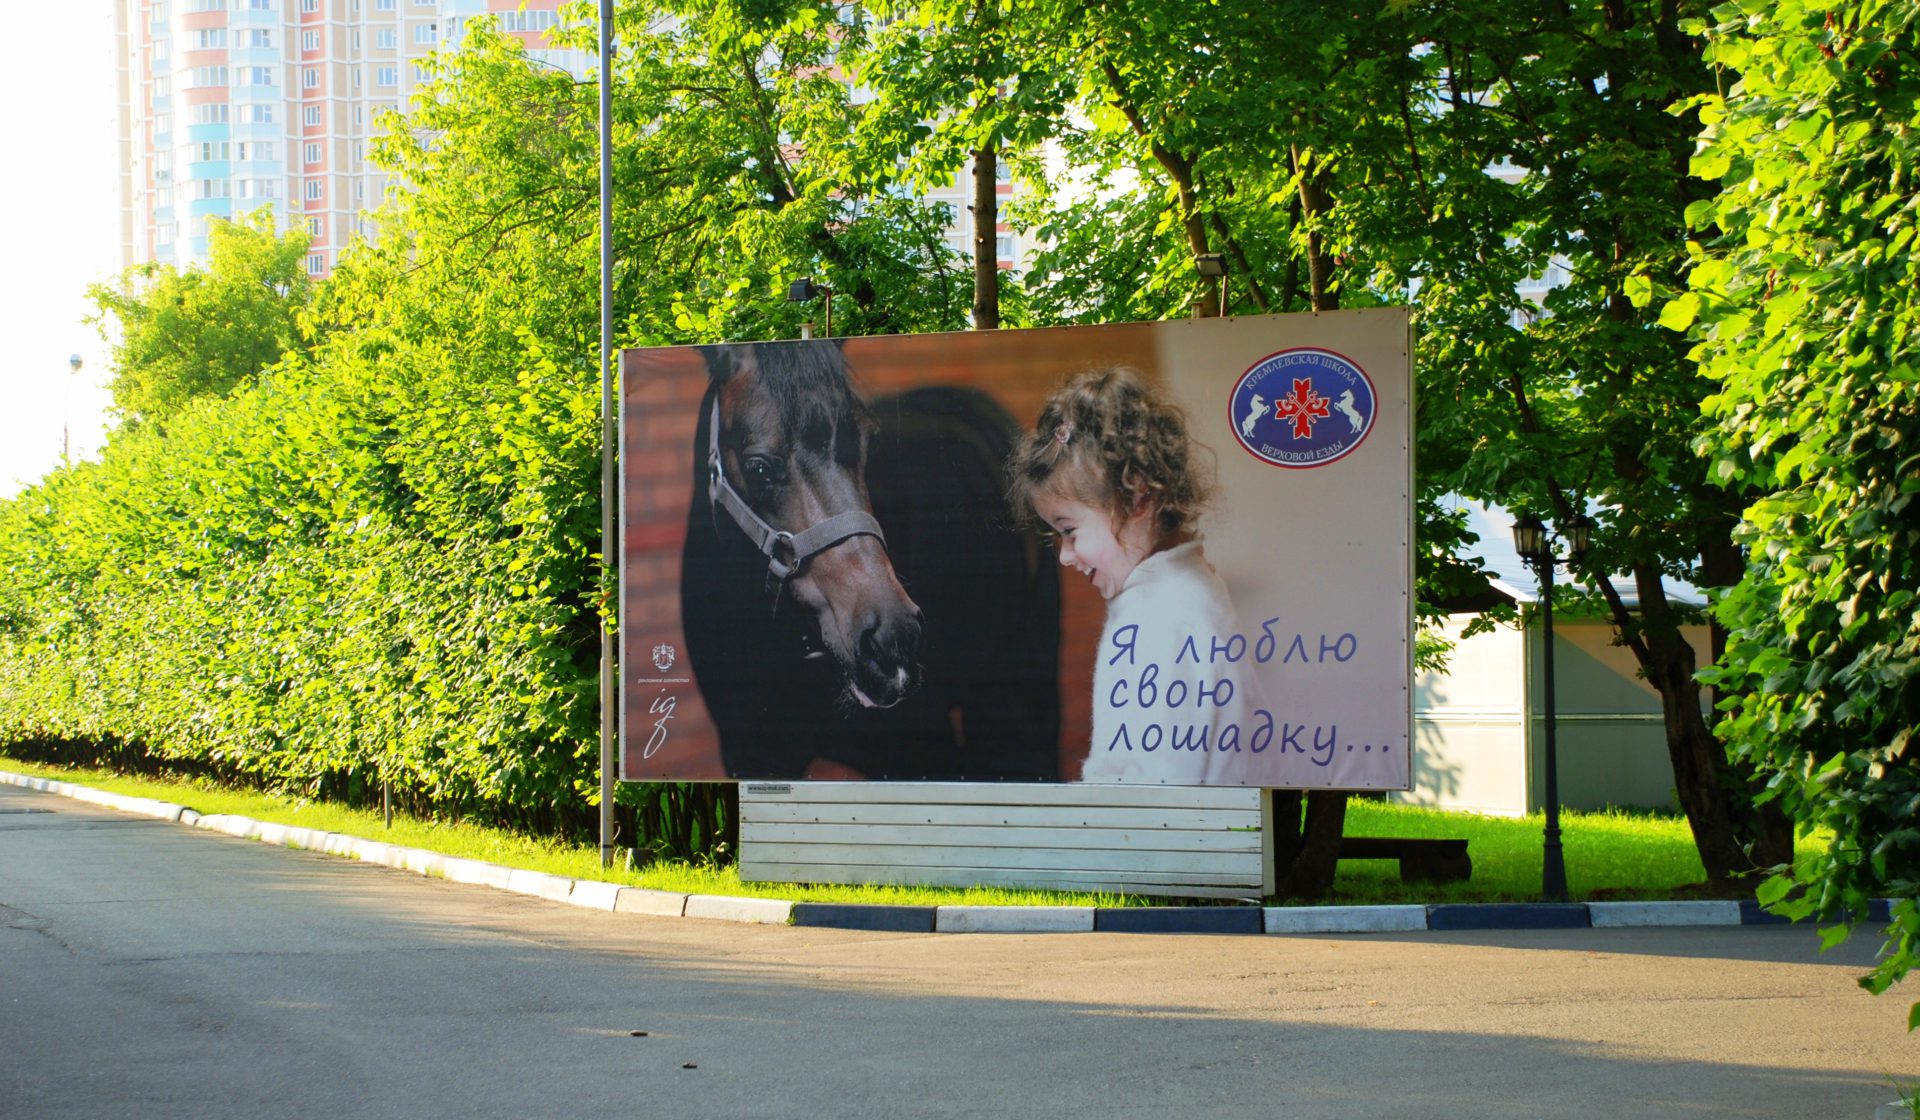 Реклама кск. Баннер с лошадьми. Рекламный баннер с лошадьми. Лошадь на билборде.